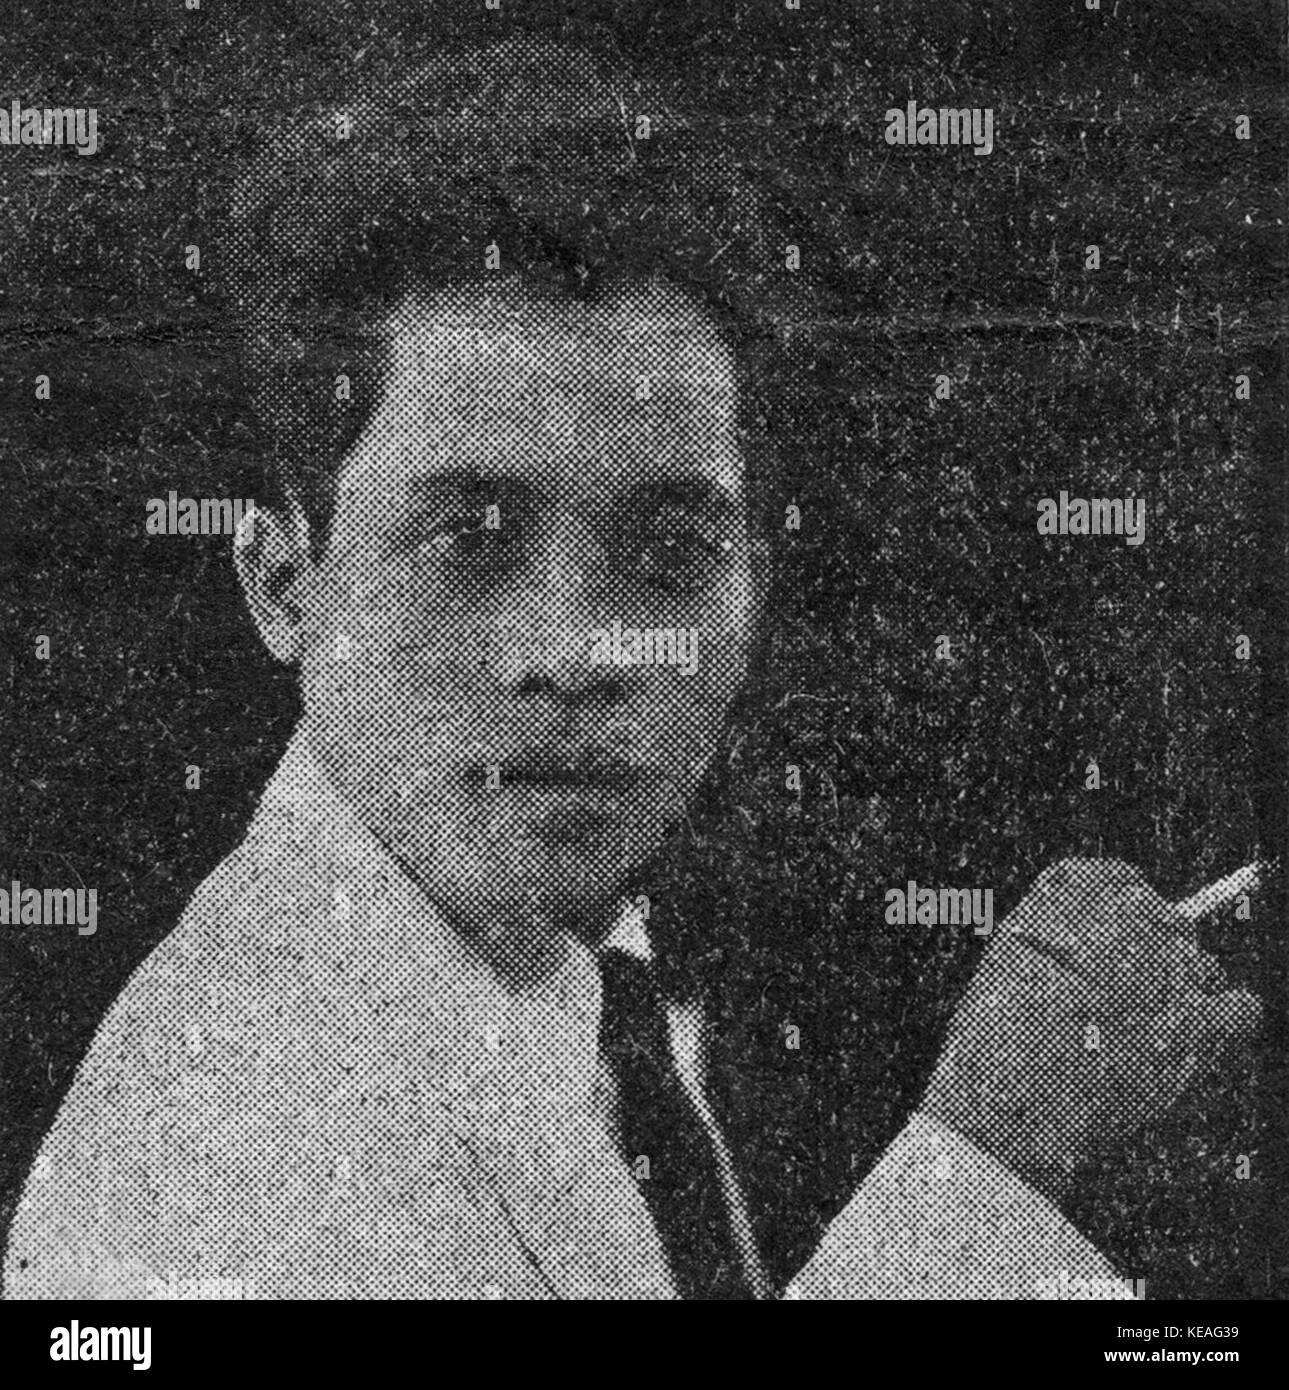 Gadjali, His Master's Voice Advertisement, Surabaya (c 1930s) Stock Photo